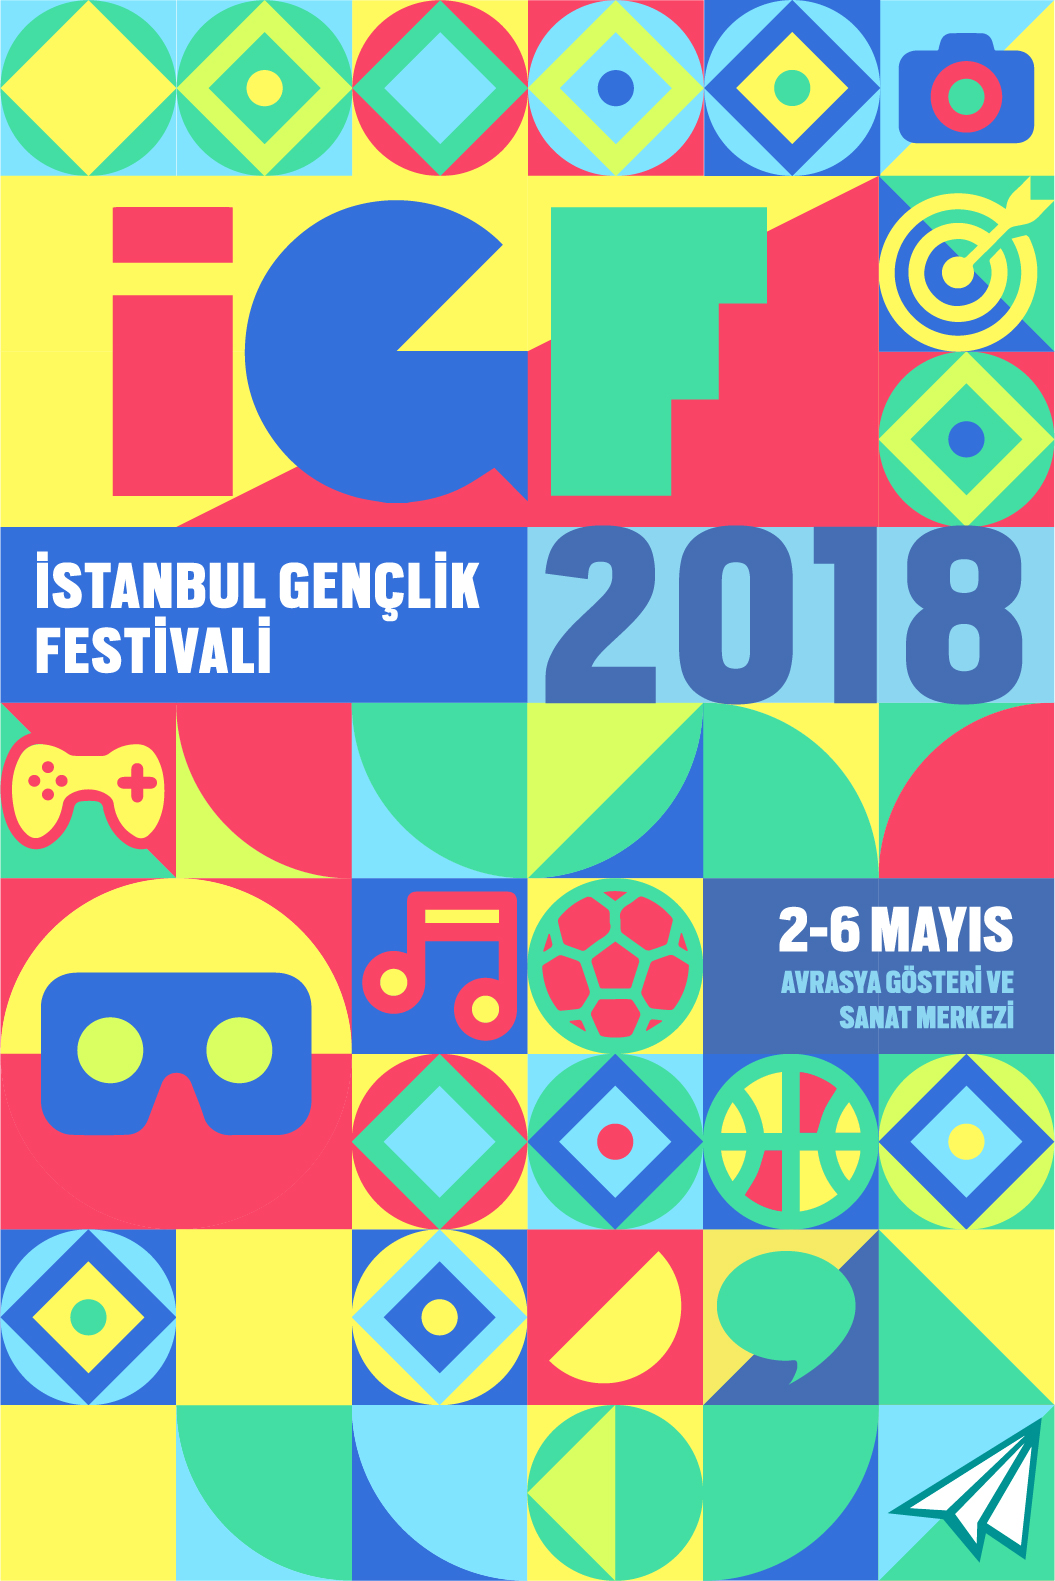 İstanbul Gençlik Festivali’ne Türk Telekom Ana Sponsorluğu